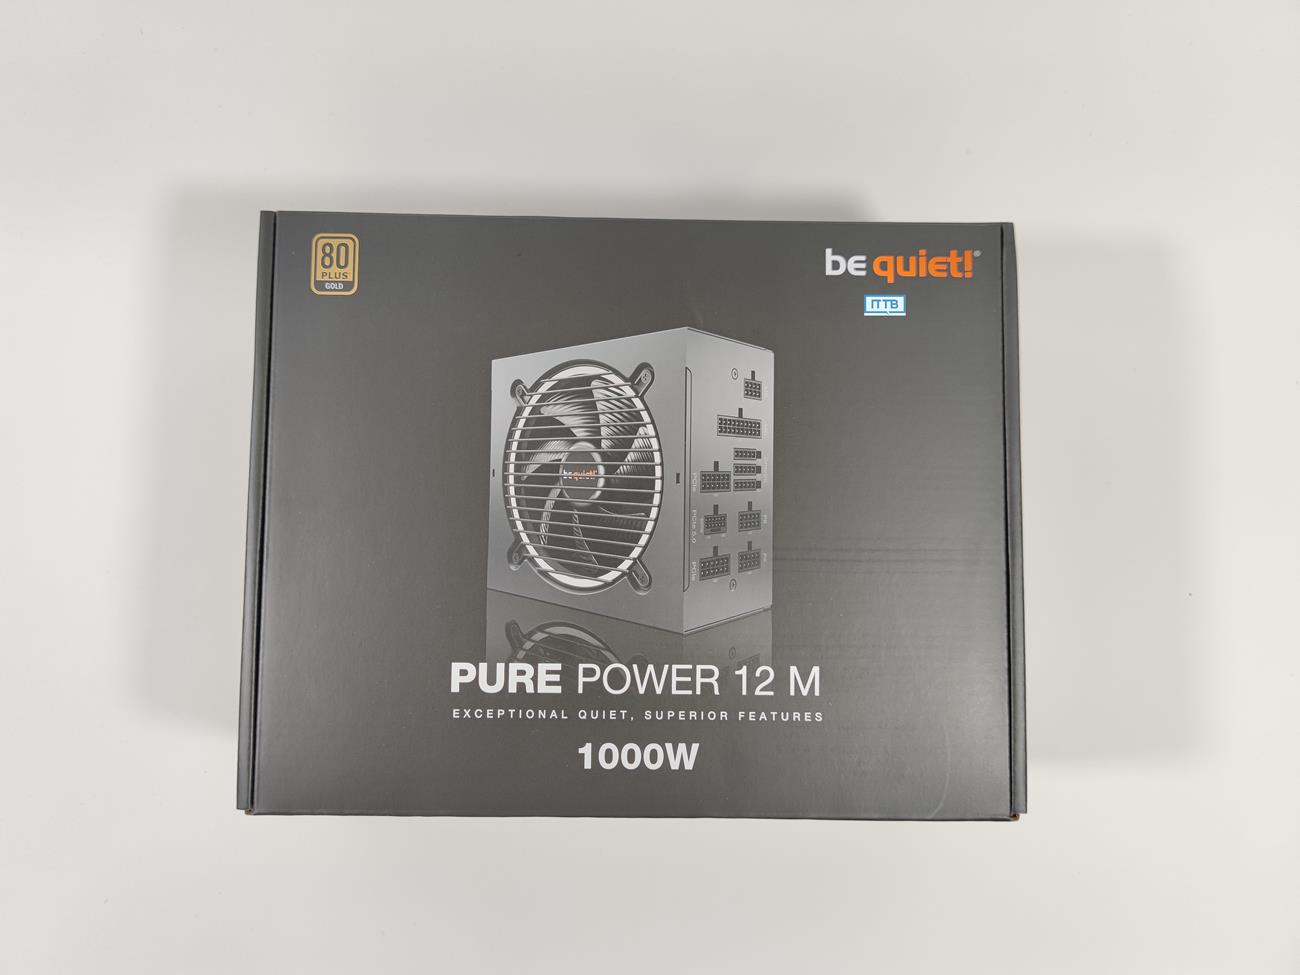 test be quiet! Pure Power 12 M 1000W, recenzja be quiet! Pure Power 12 M 1000W, opinia be quiet! Pure Power 12 M 1000W